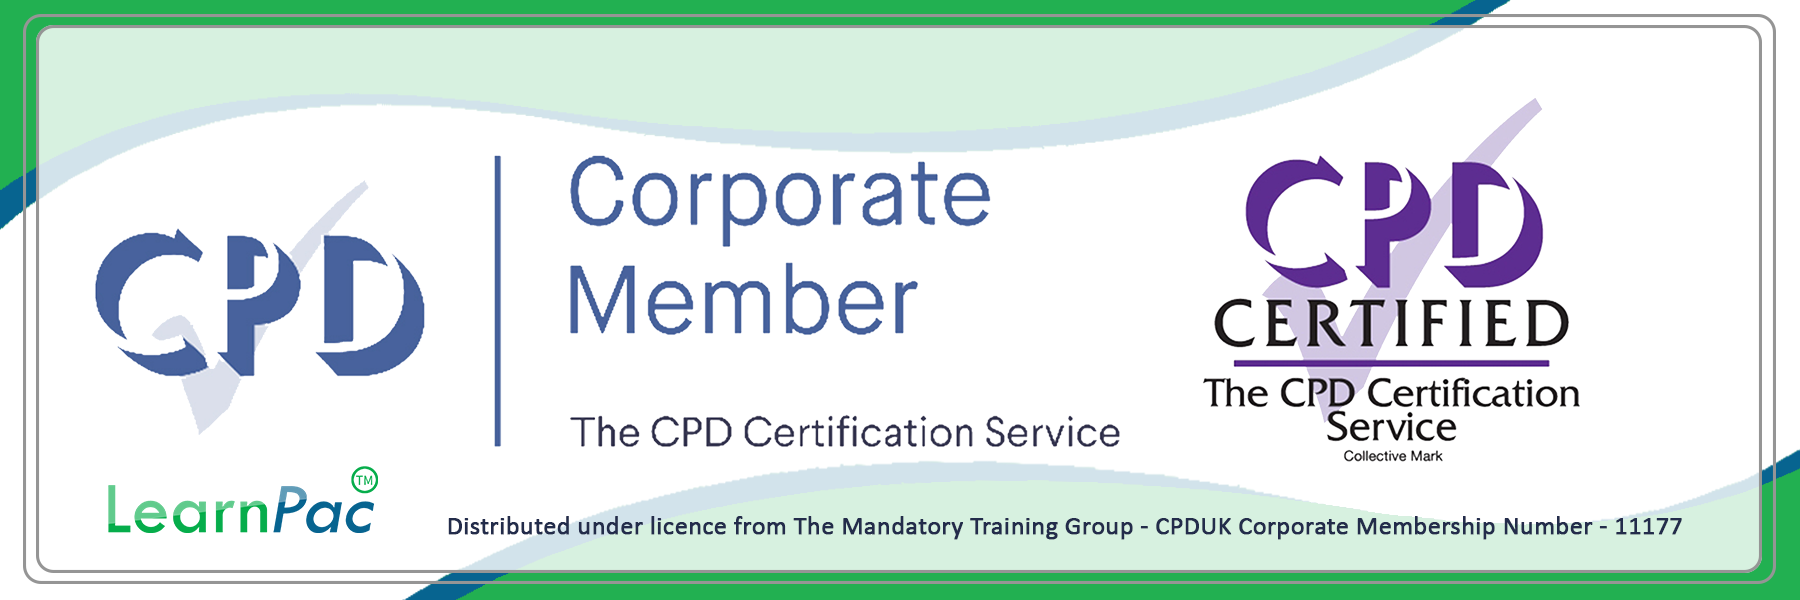 Care Certificate Standard 2 - CPDUK Certified - Learnpac System UK -